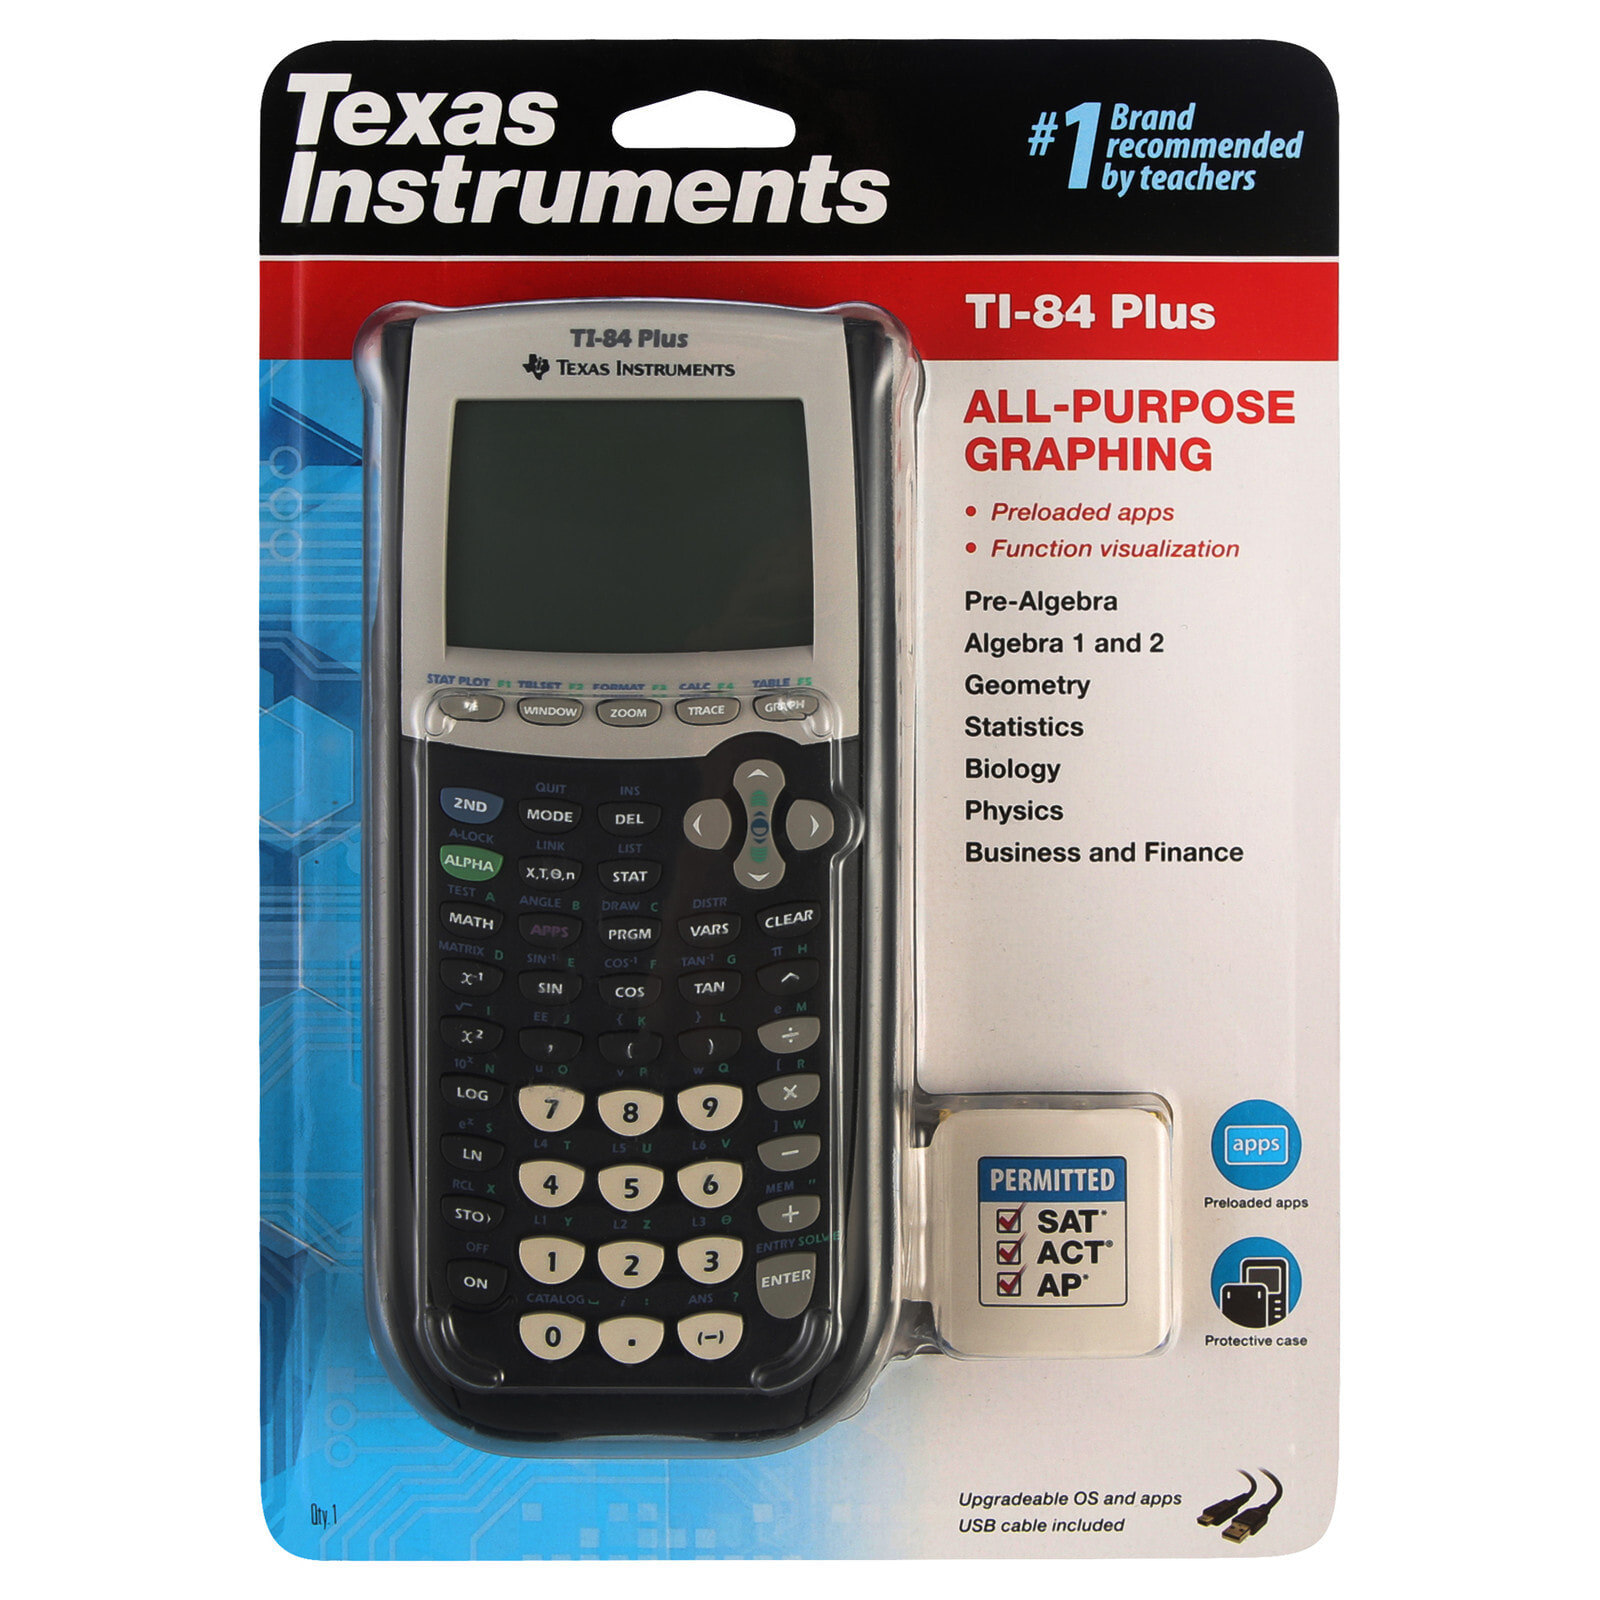 Star calculator. Texas instruments calculator ti 84 Plus. Texas instruments калькулятор. Harpoon ти 084-08*).